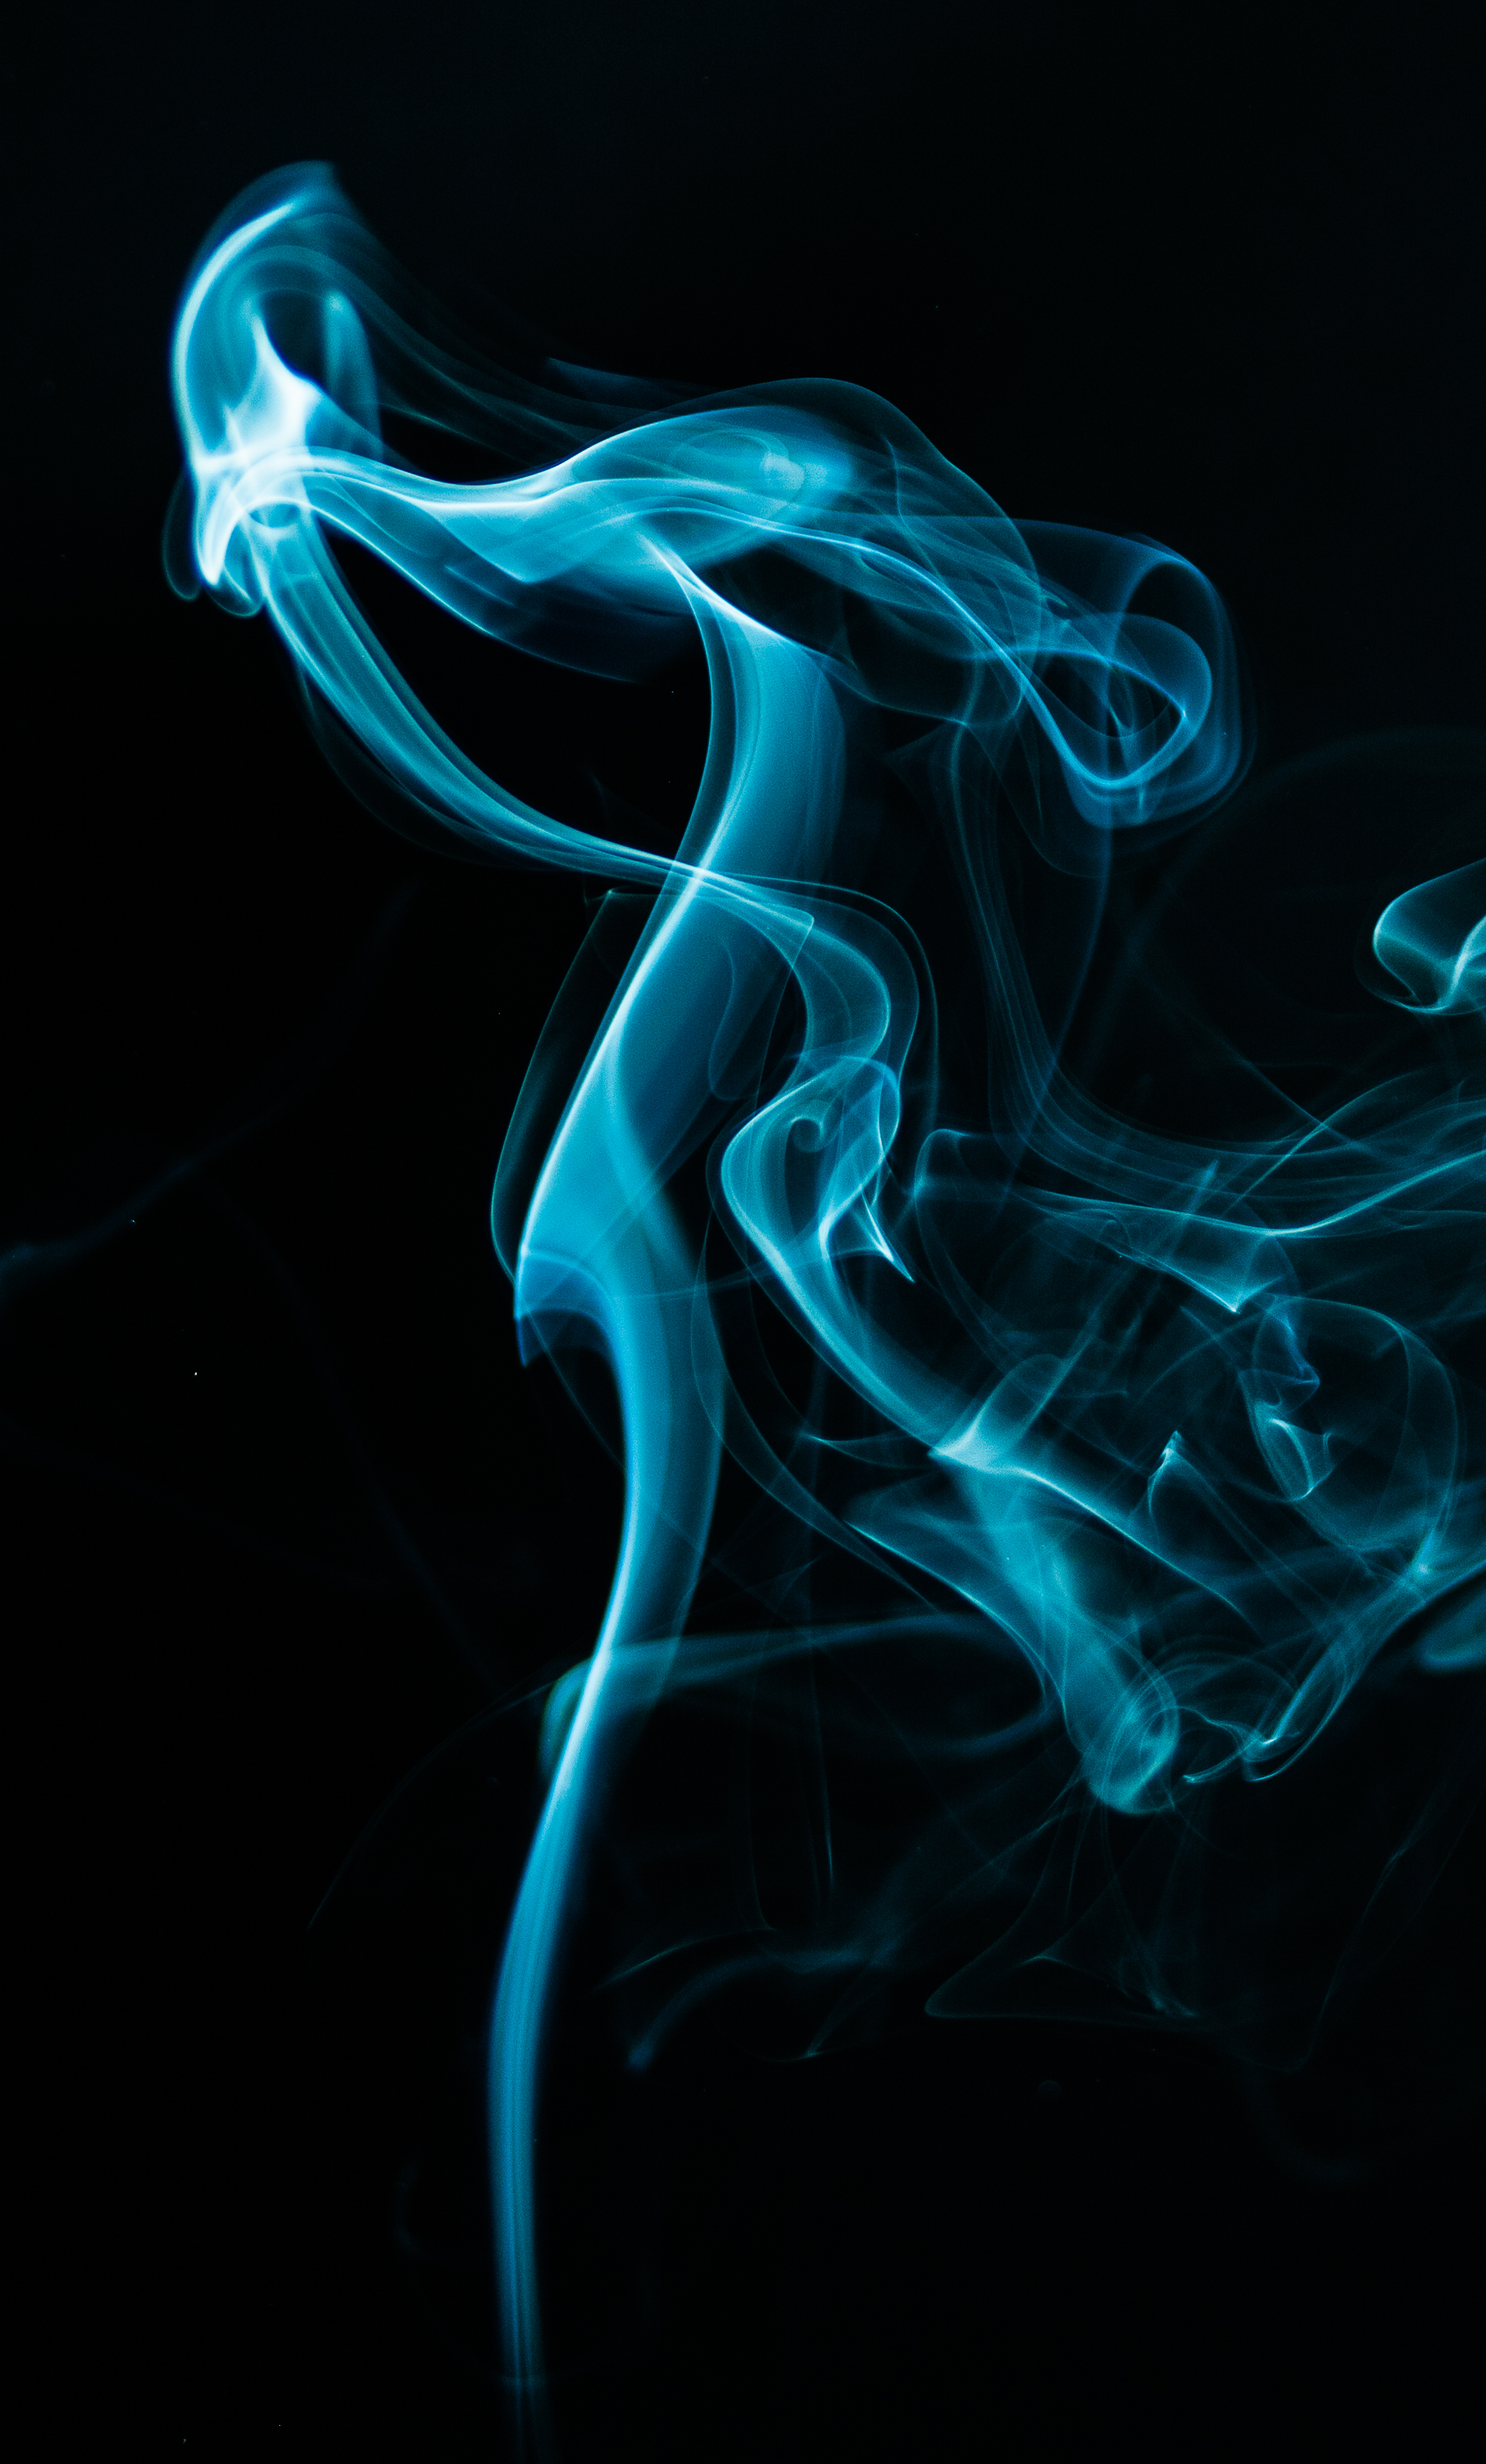 dark, abstract, background, smoke